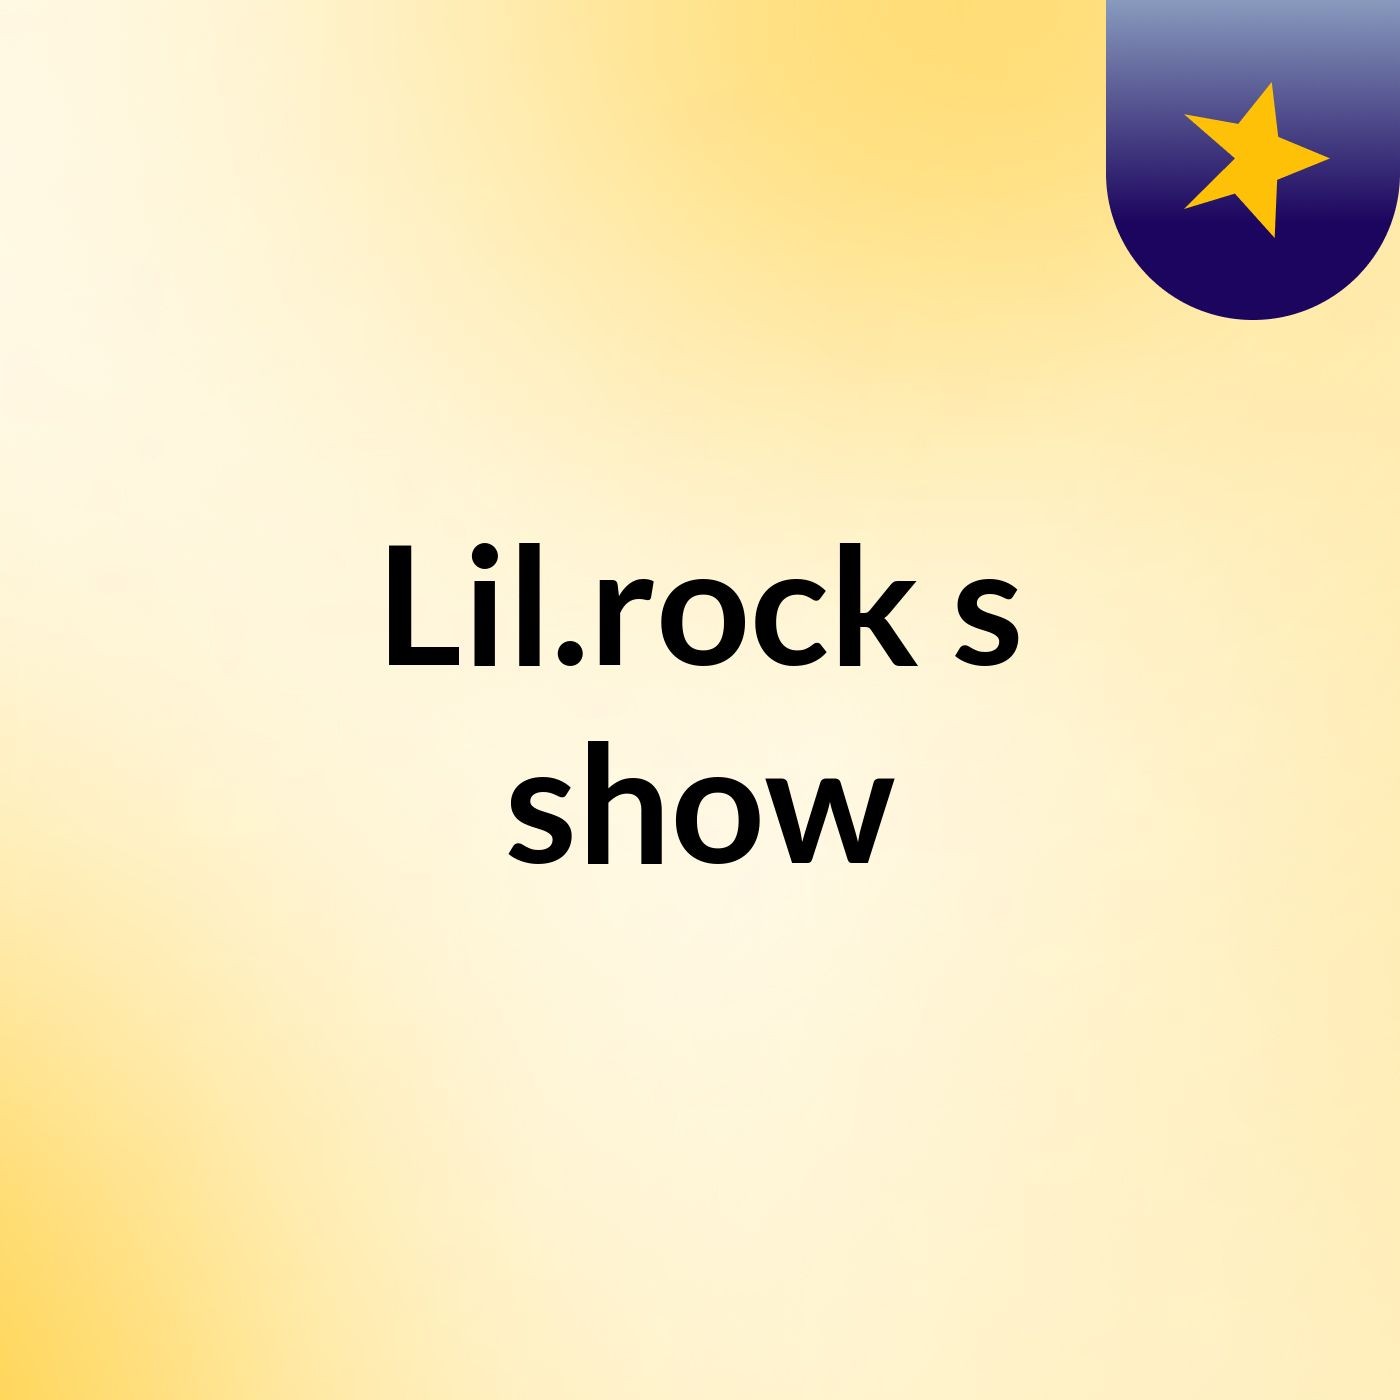 Lil.rock's show